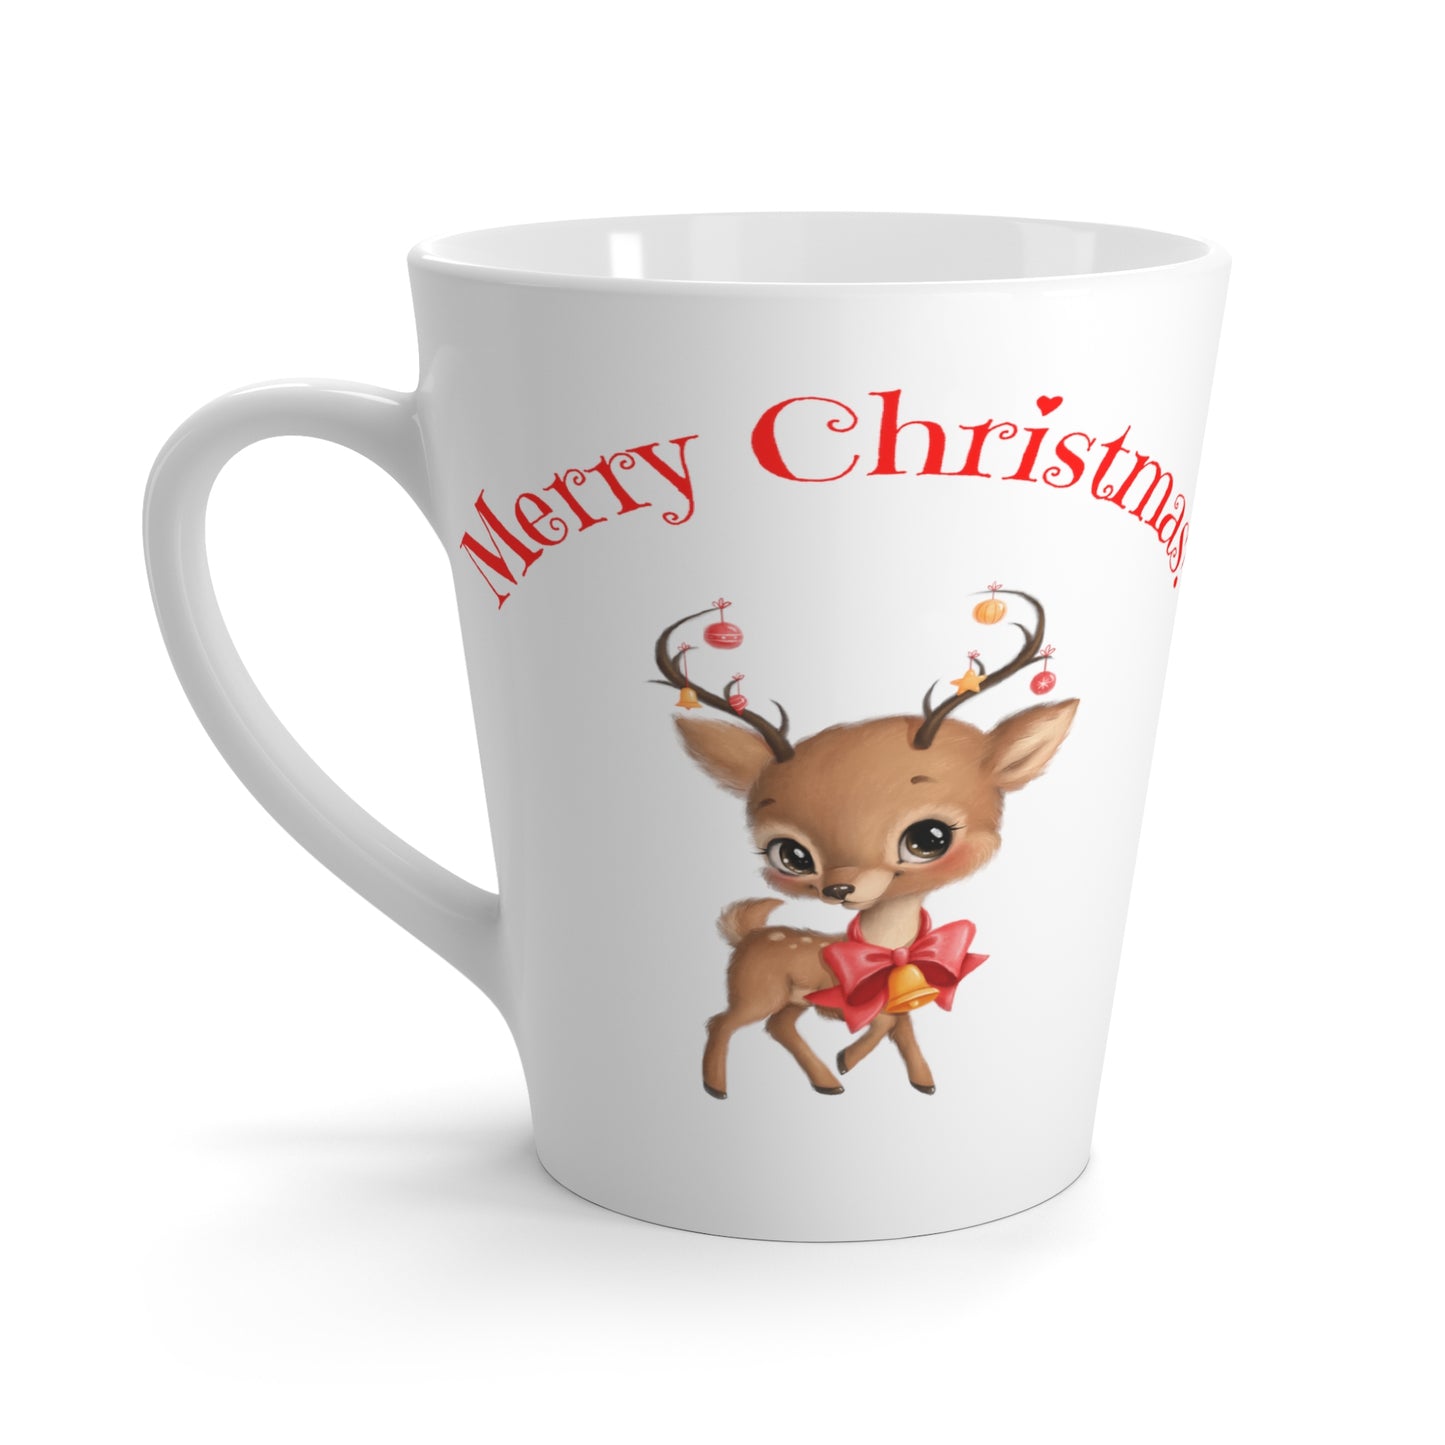 Merry Christmas Theme Latte Ceramic Mug, 12oz